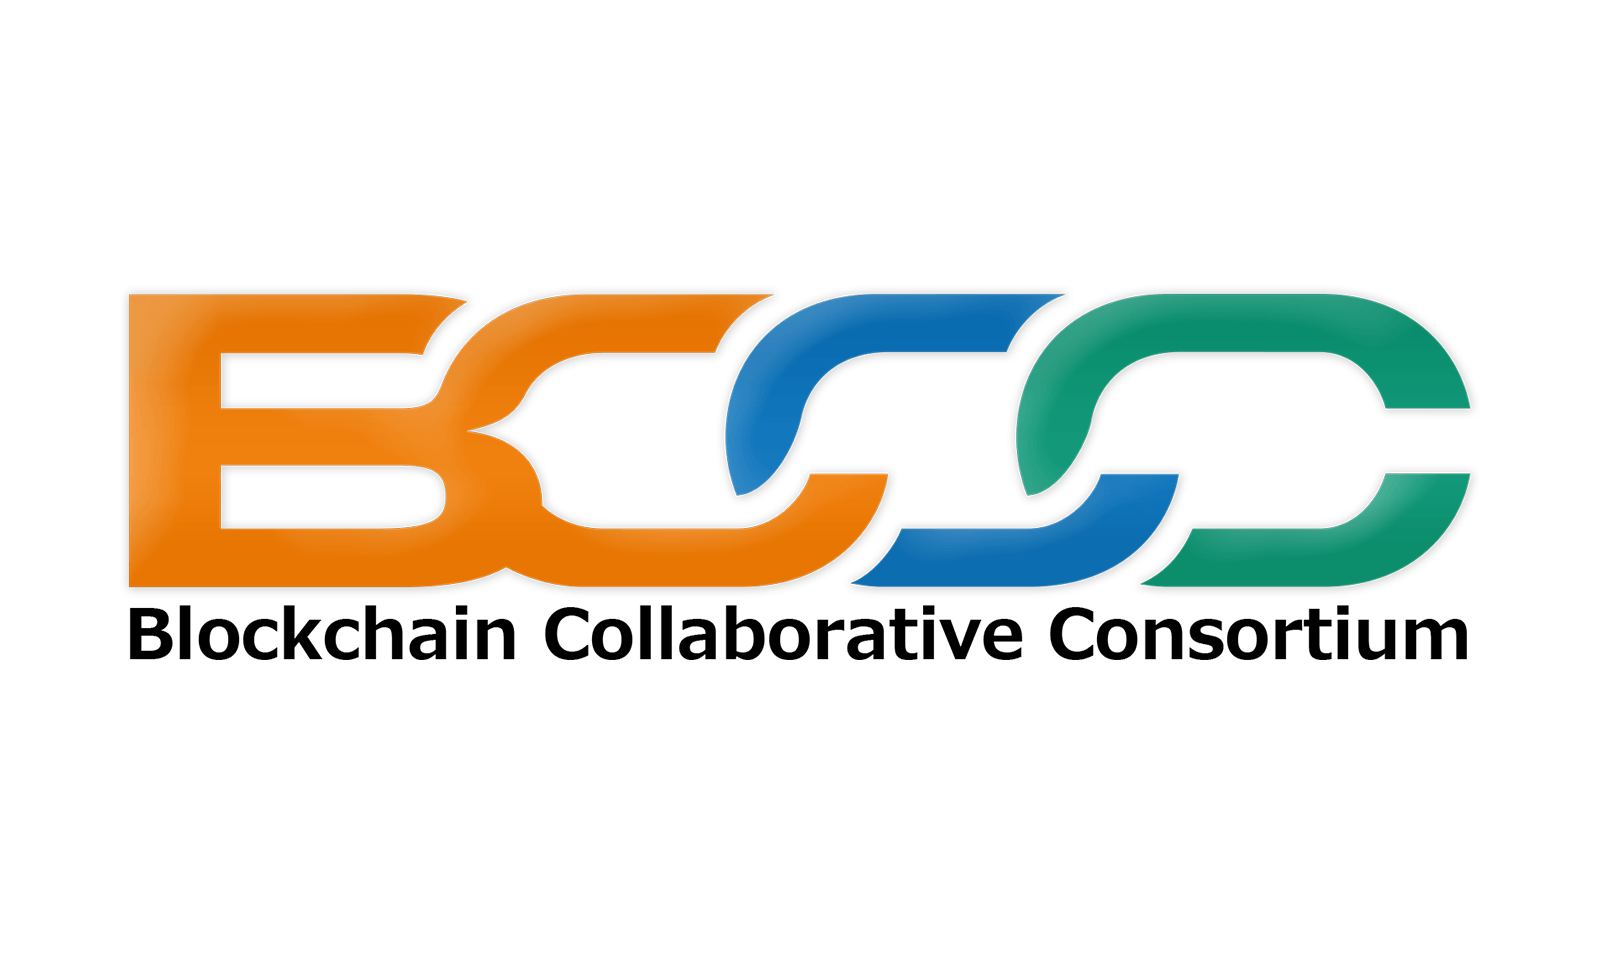 Bccc Logo - Japan's first blockchain industry organization, “Blockchain